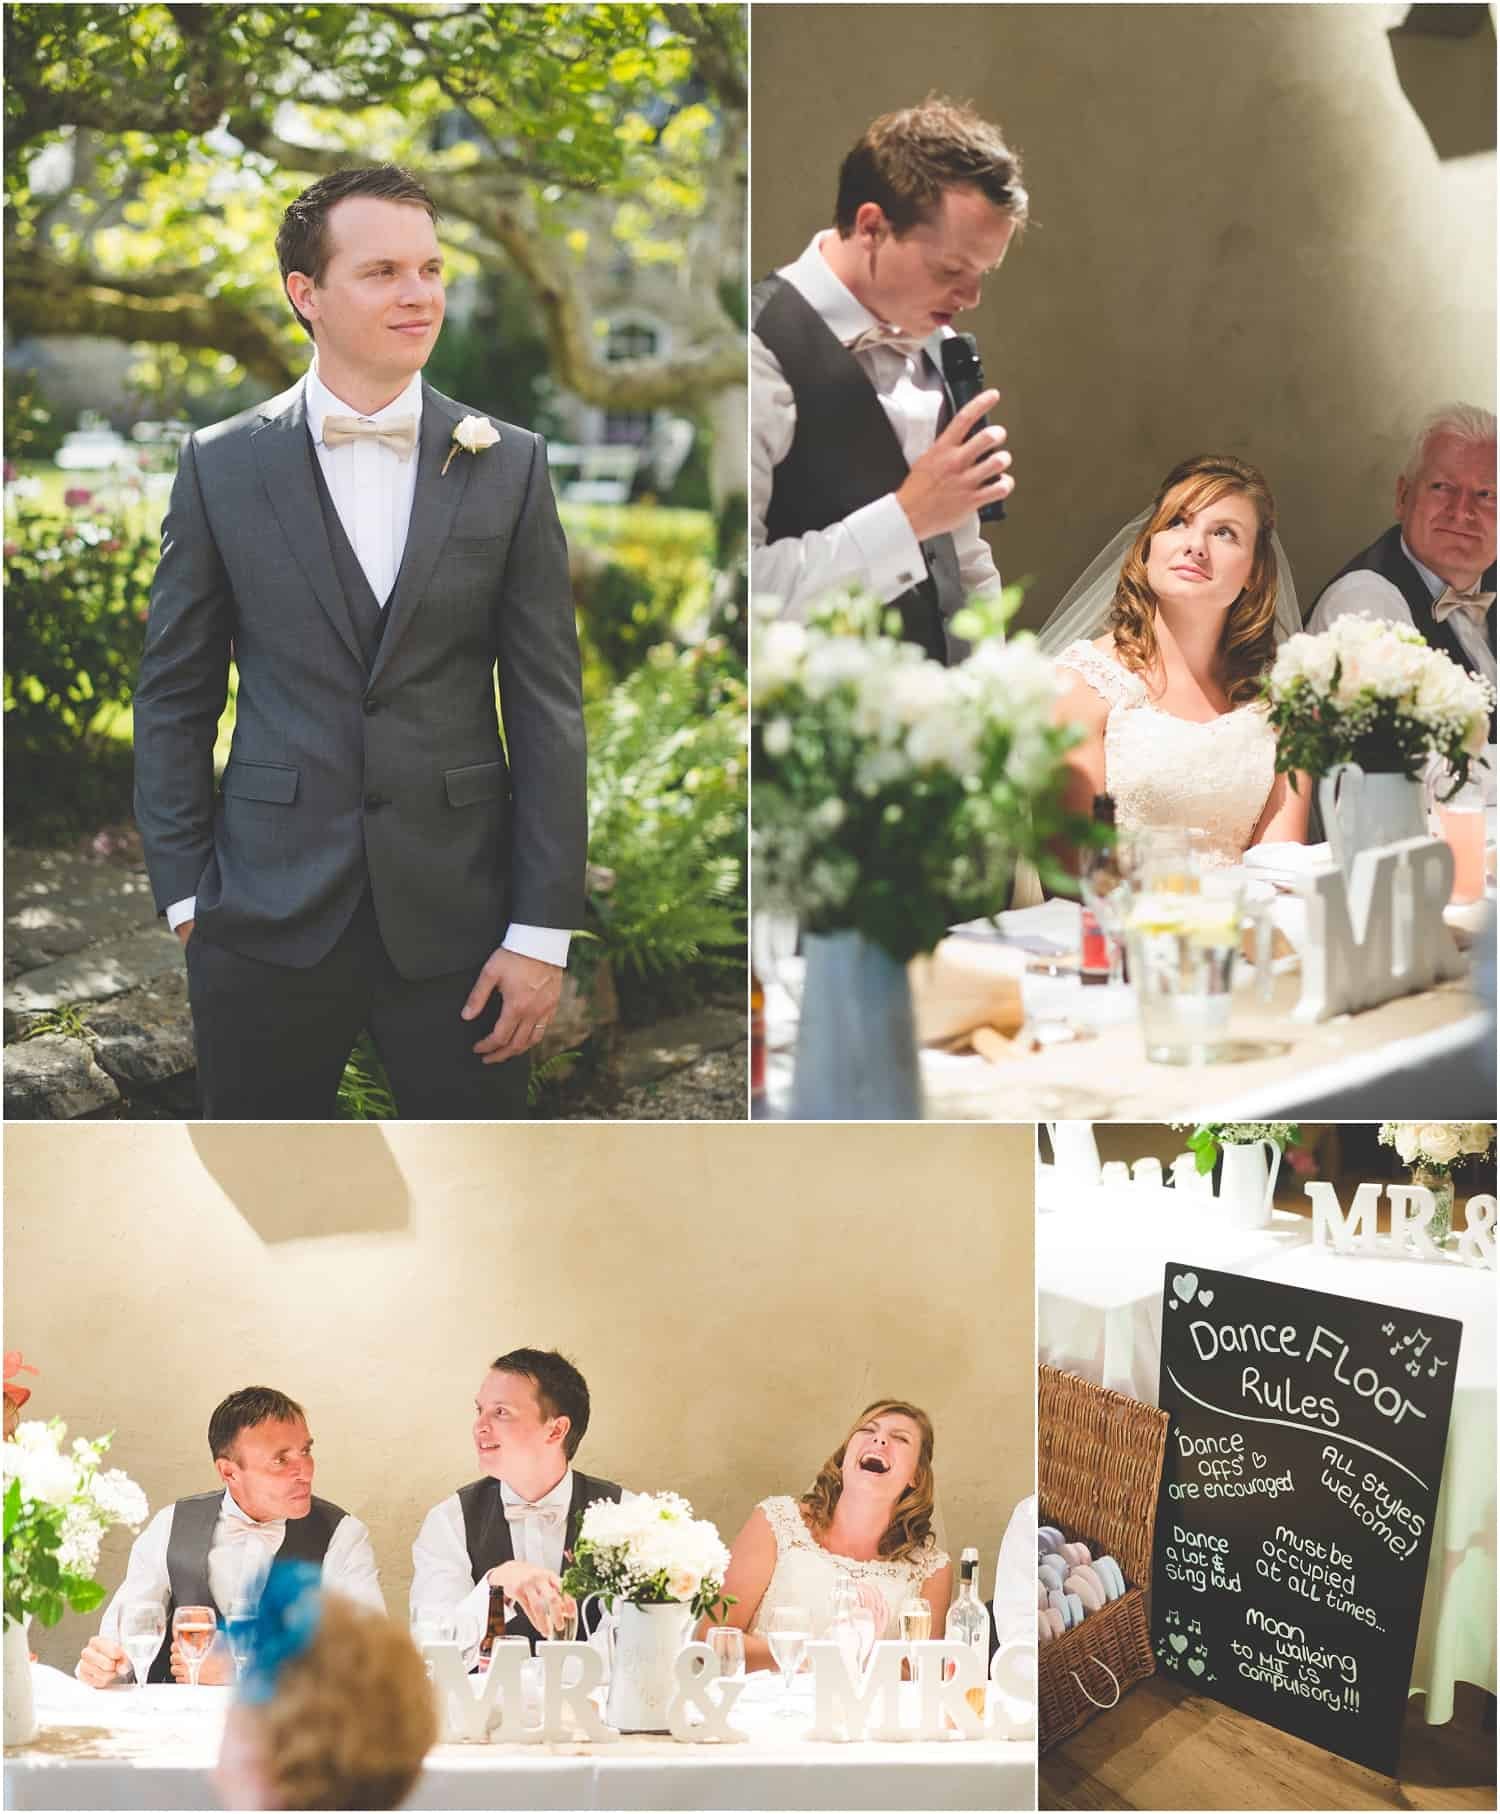 The Great Barn Weddings - Rachel & Nathan - images by Josh Gooding